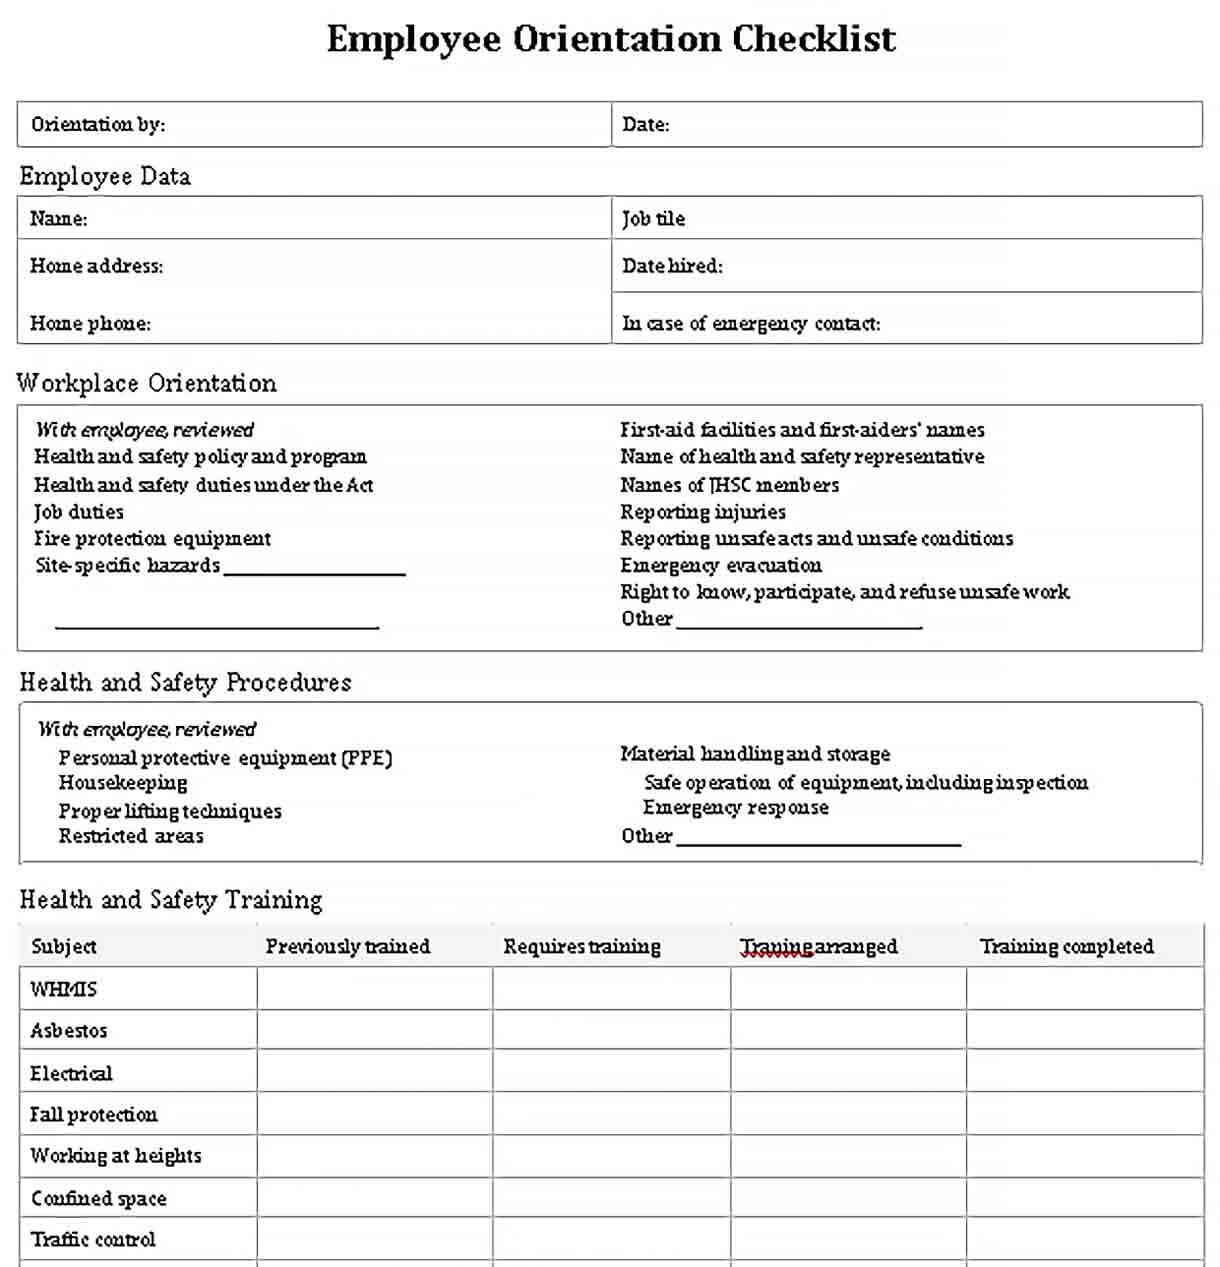 Orientation Checklist Template  With Regard To Orientation Checklist Template For New Employee Inside Orientation Checklist Template For New Employee